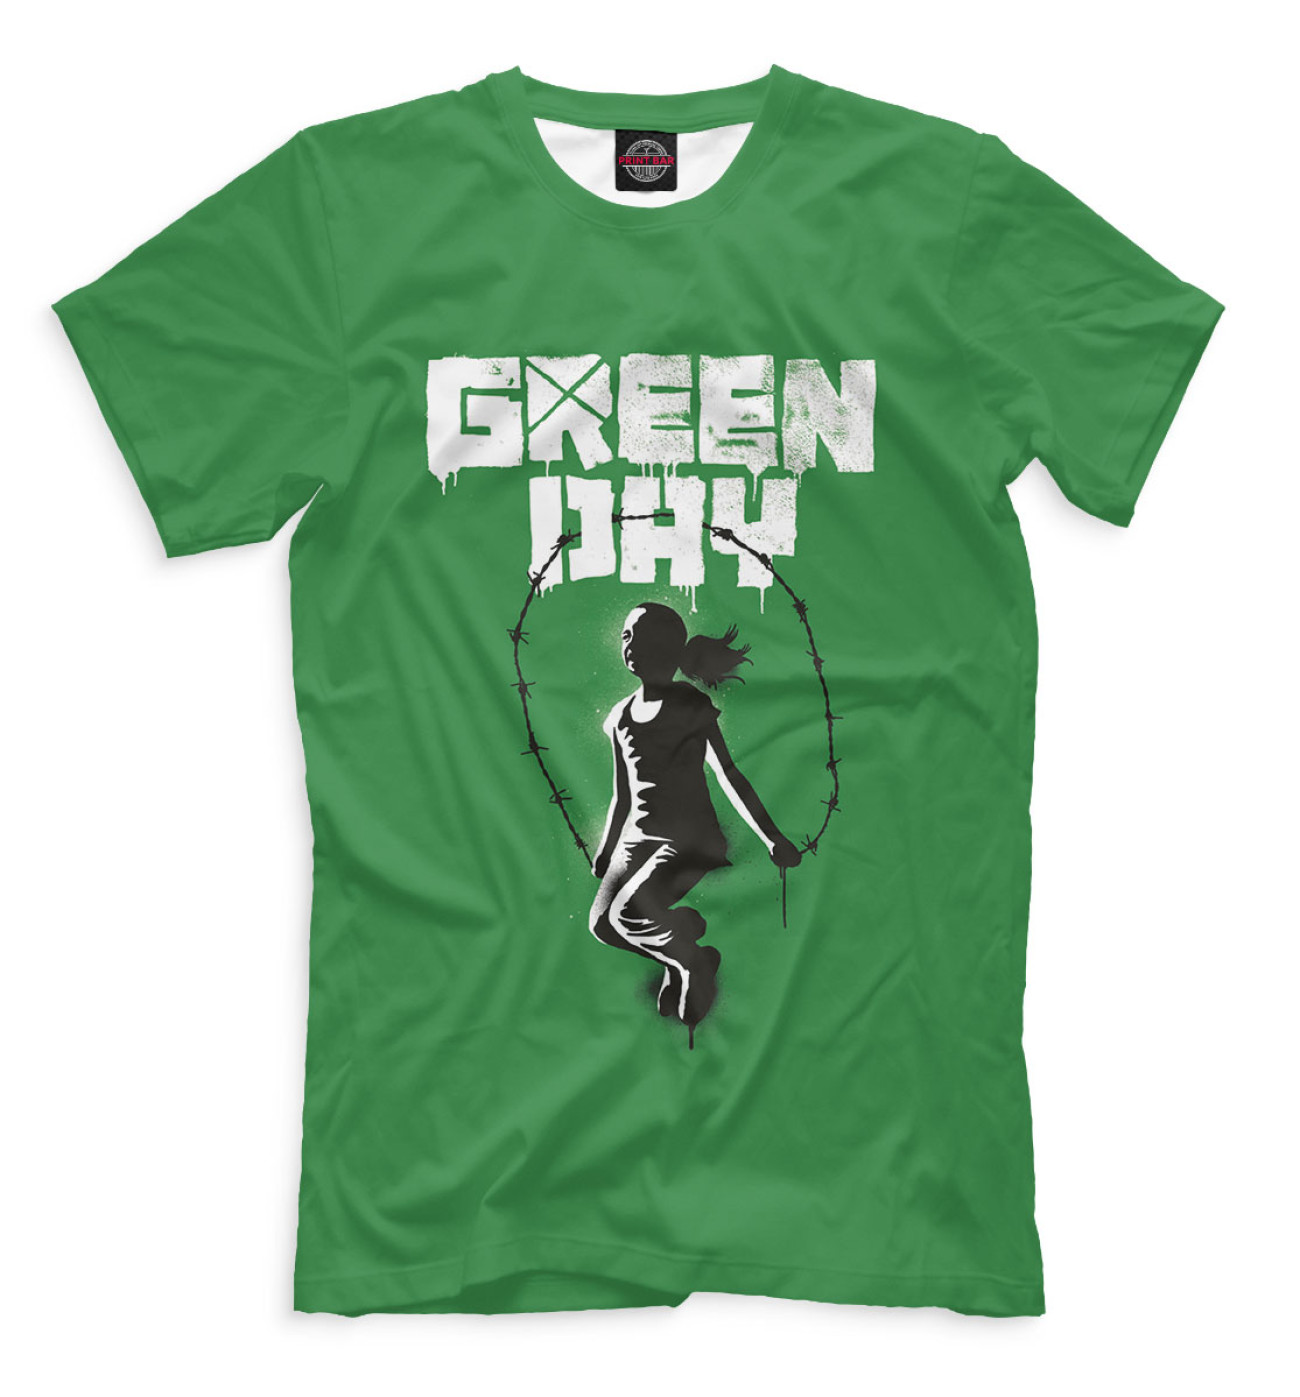 Мужская Футболка Green Day, артикул: GRE-837060-fut-2